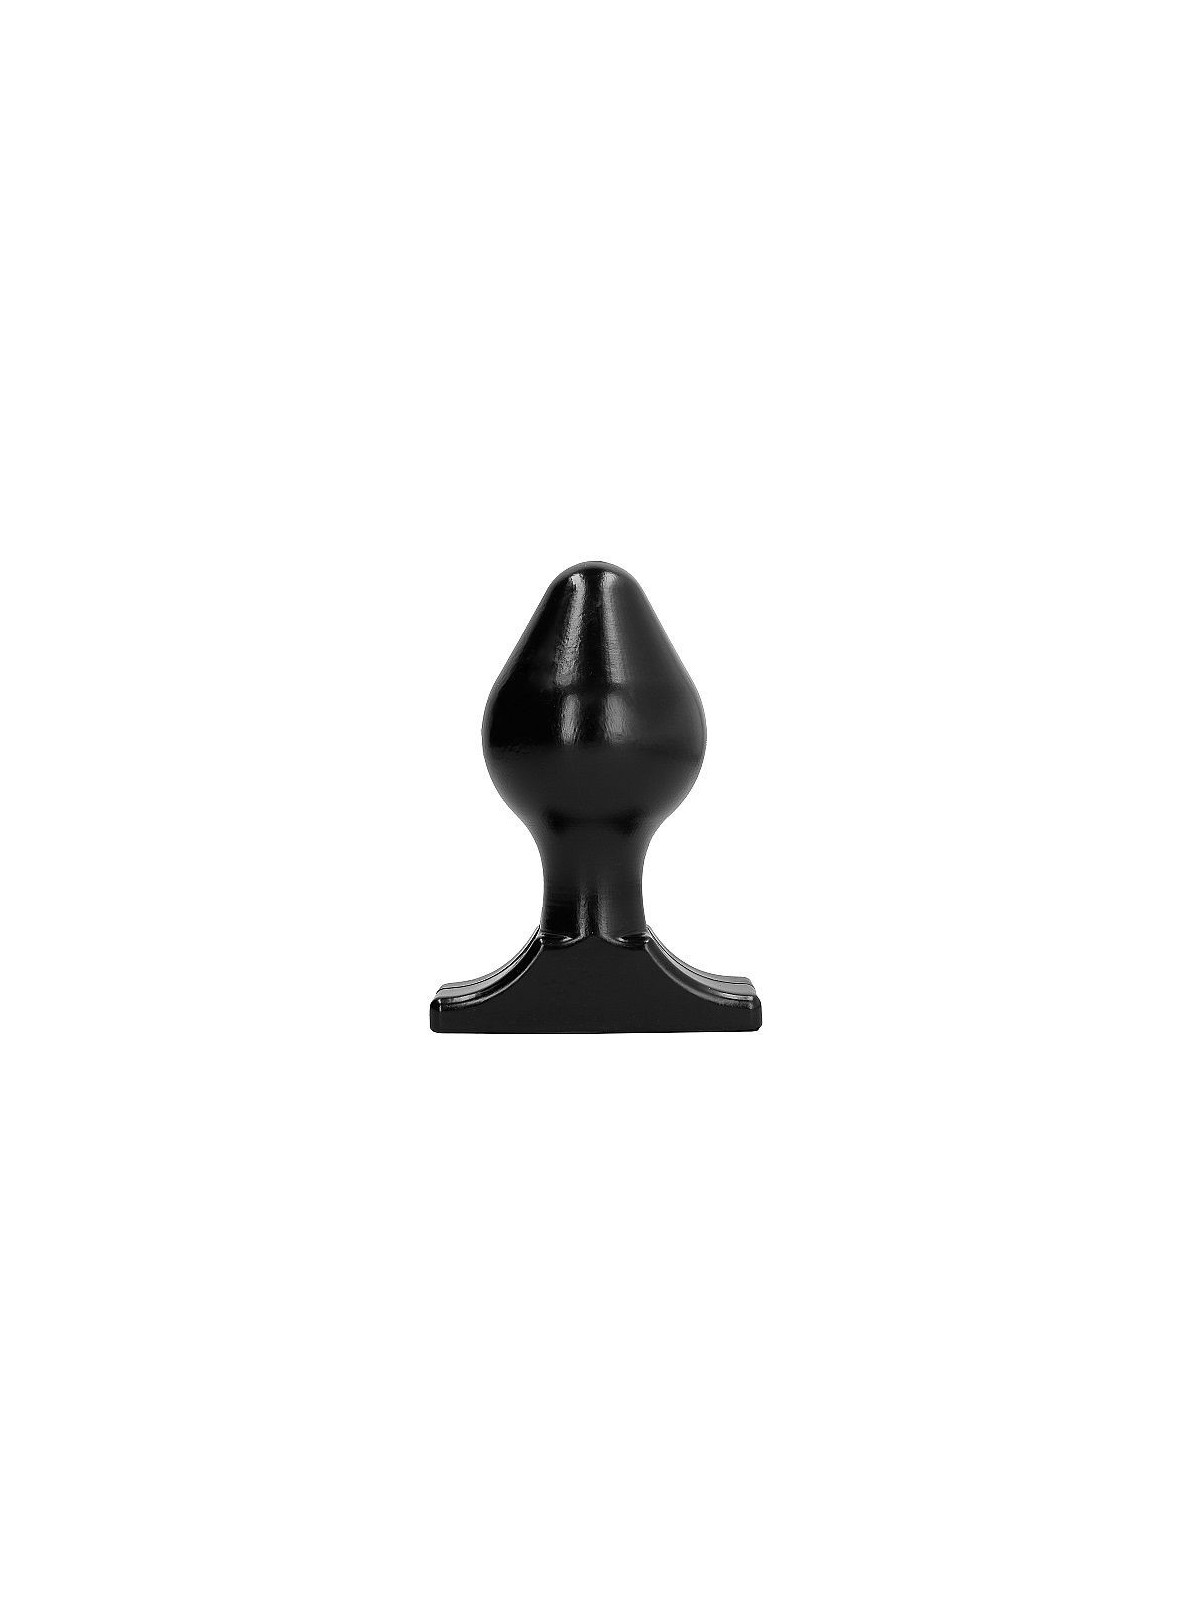 All Black Anal Plug 16x8 cm - Comprar Juguetes fisting All Black - Fisting (1)